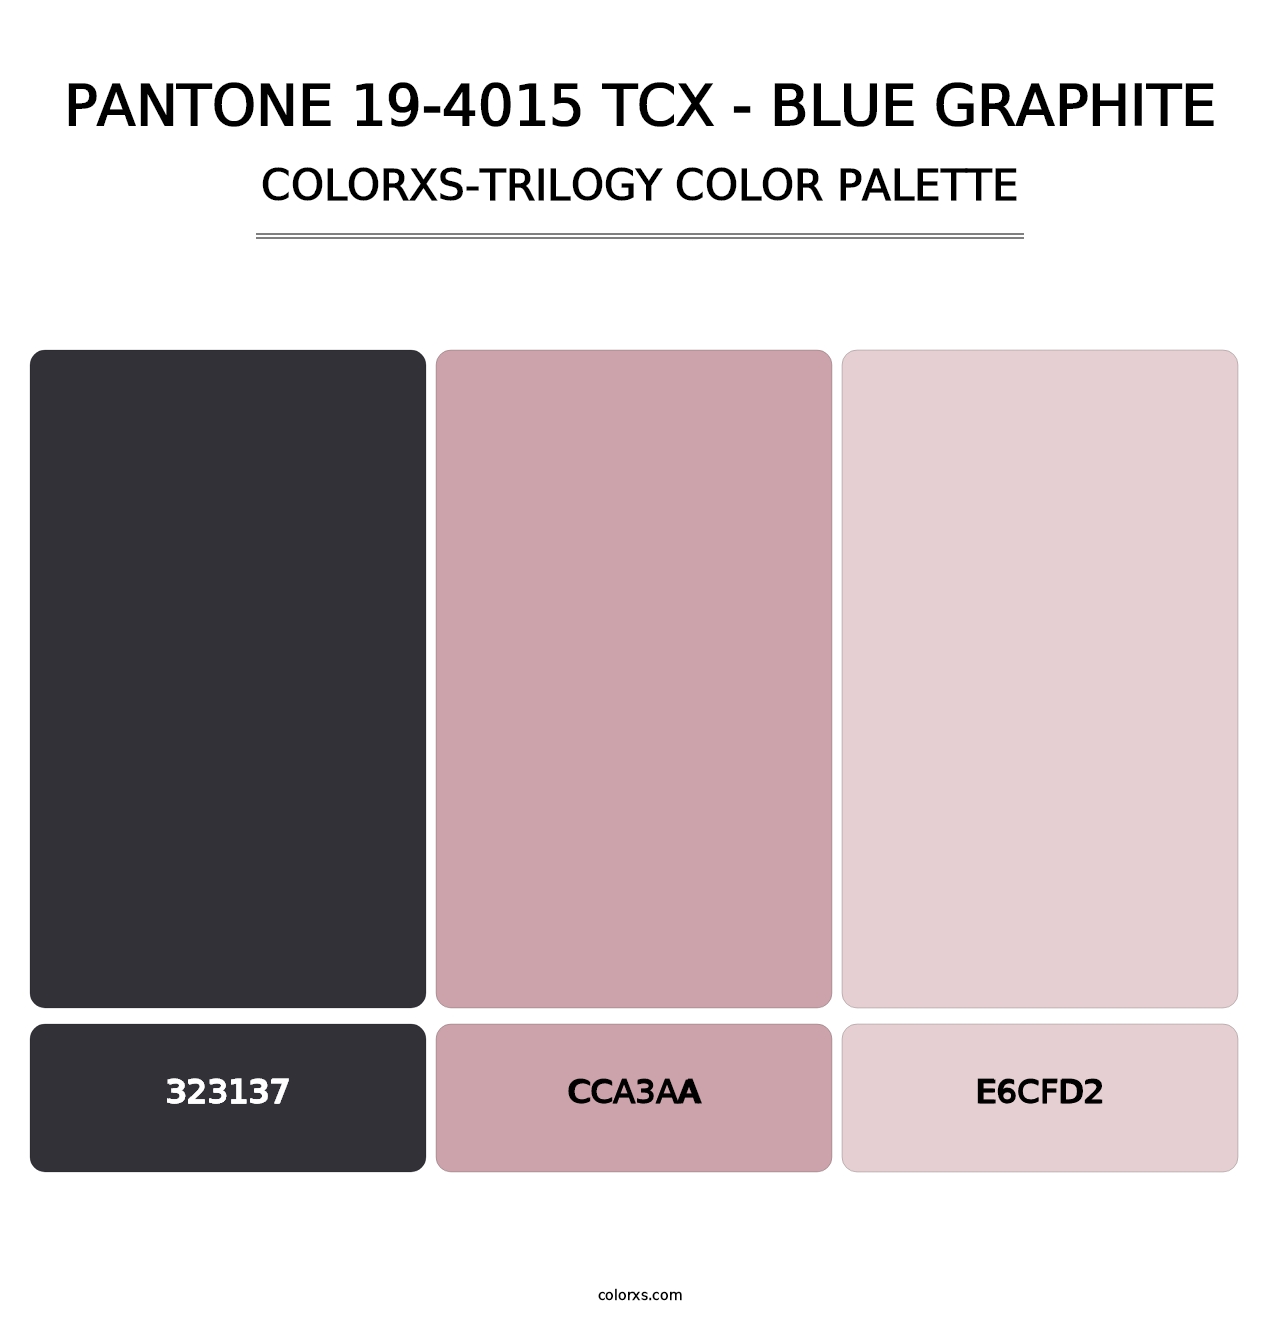 PANTONE 19-4015 TCX - Blue Graphite - Colorxs Trilogy Palette